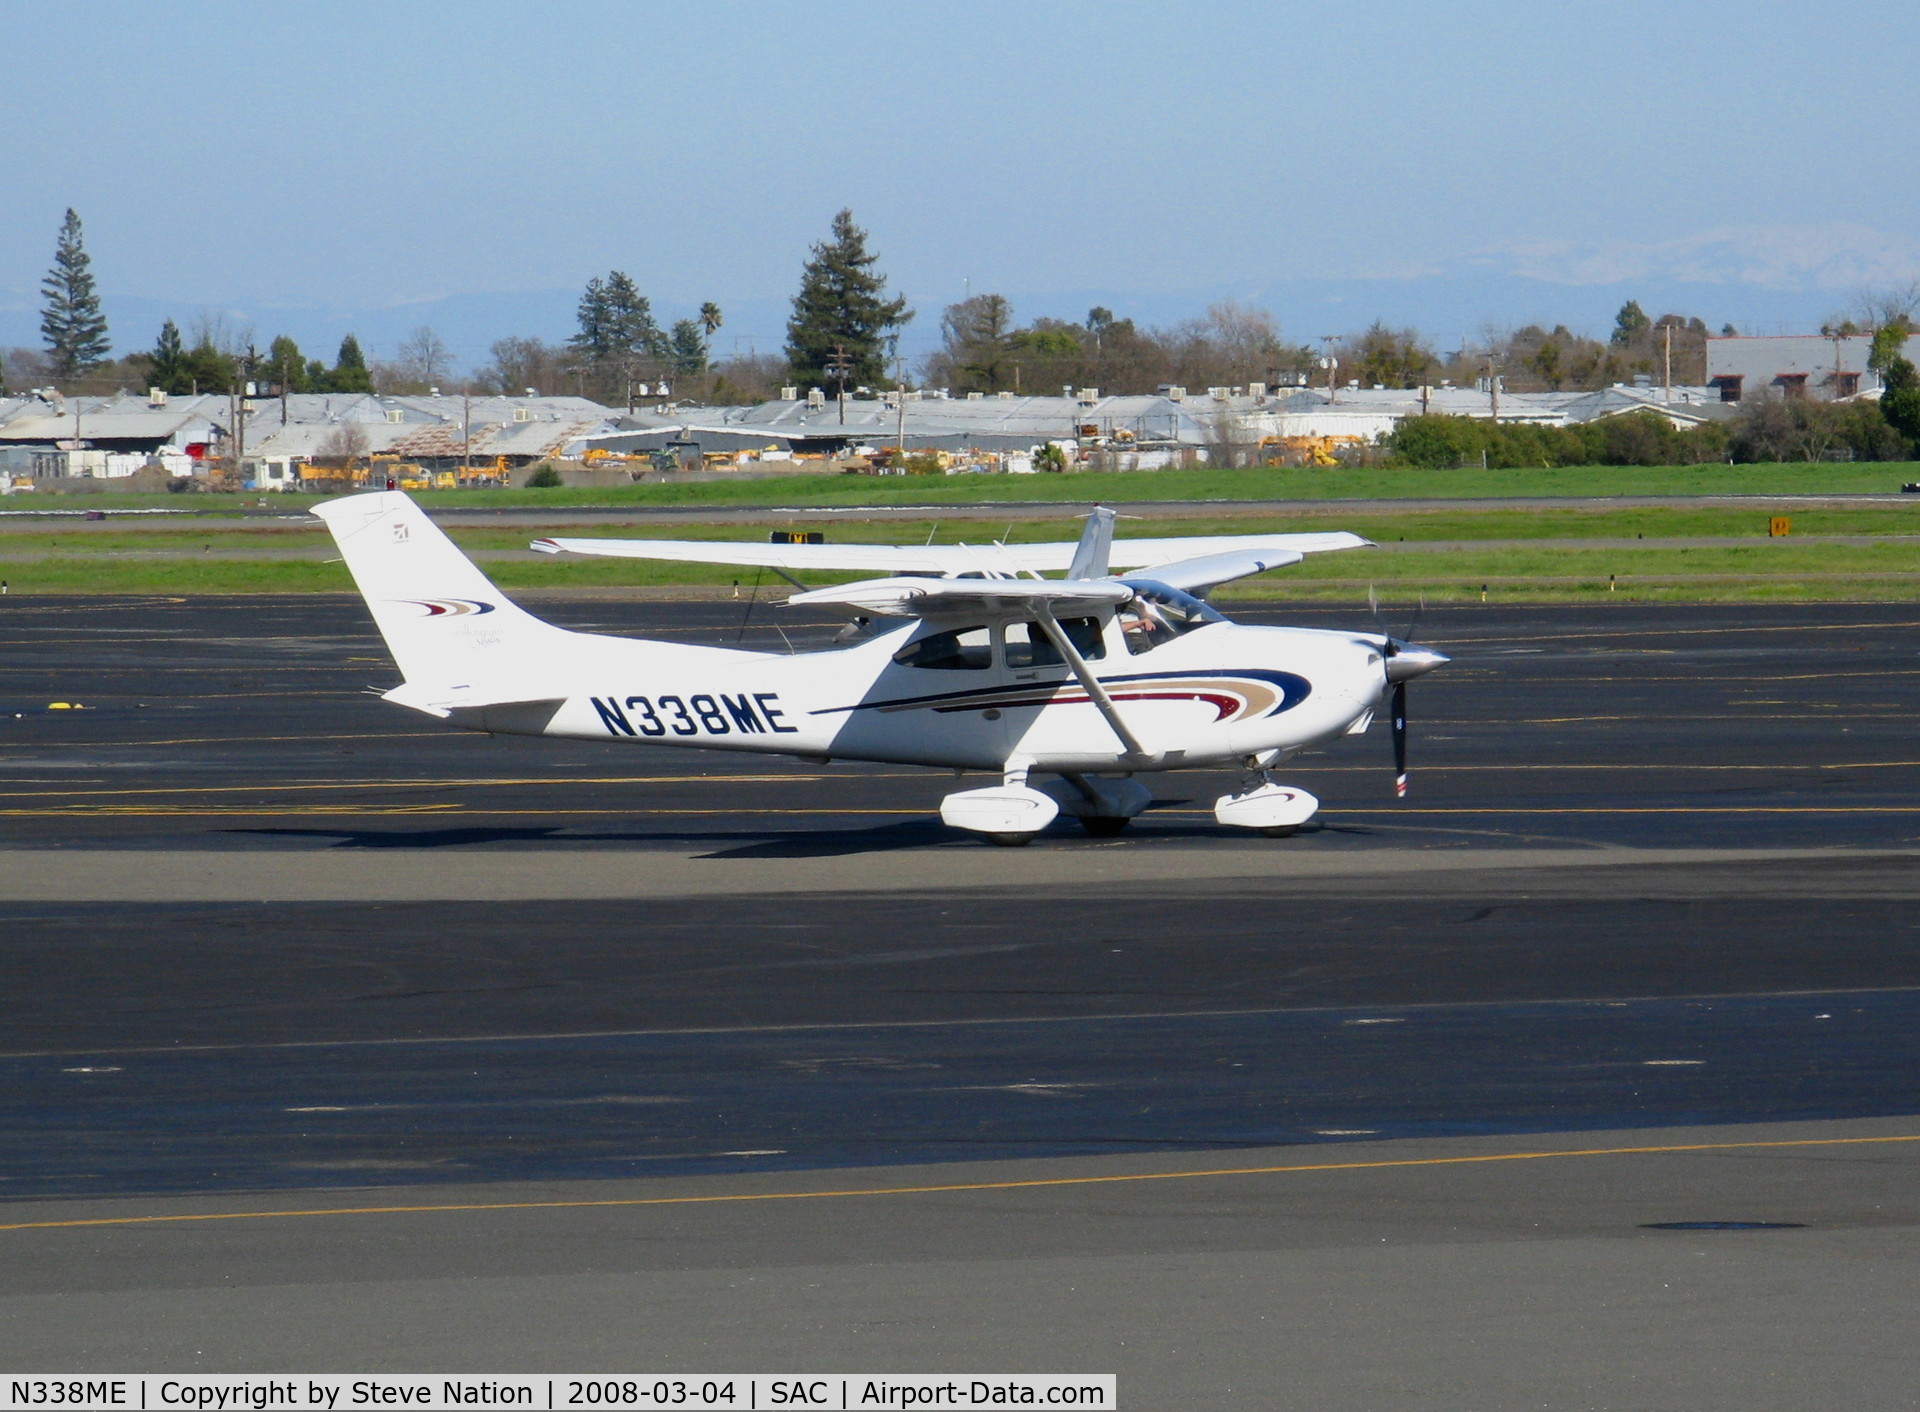 N338ME, 2000 Cessna 182S Skylane C/N 18280730, 2000 Cessna 182S taxying @ Sacramento Executive Airport, CA